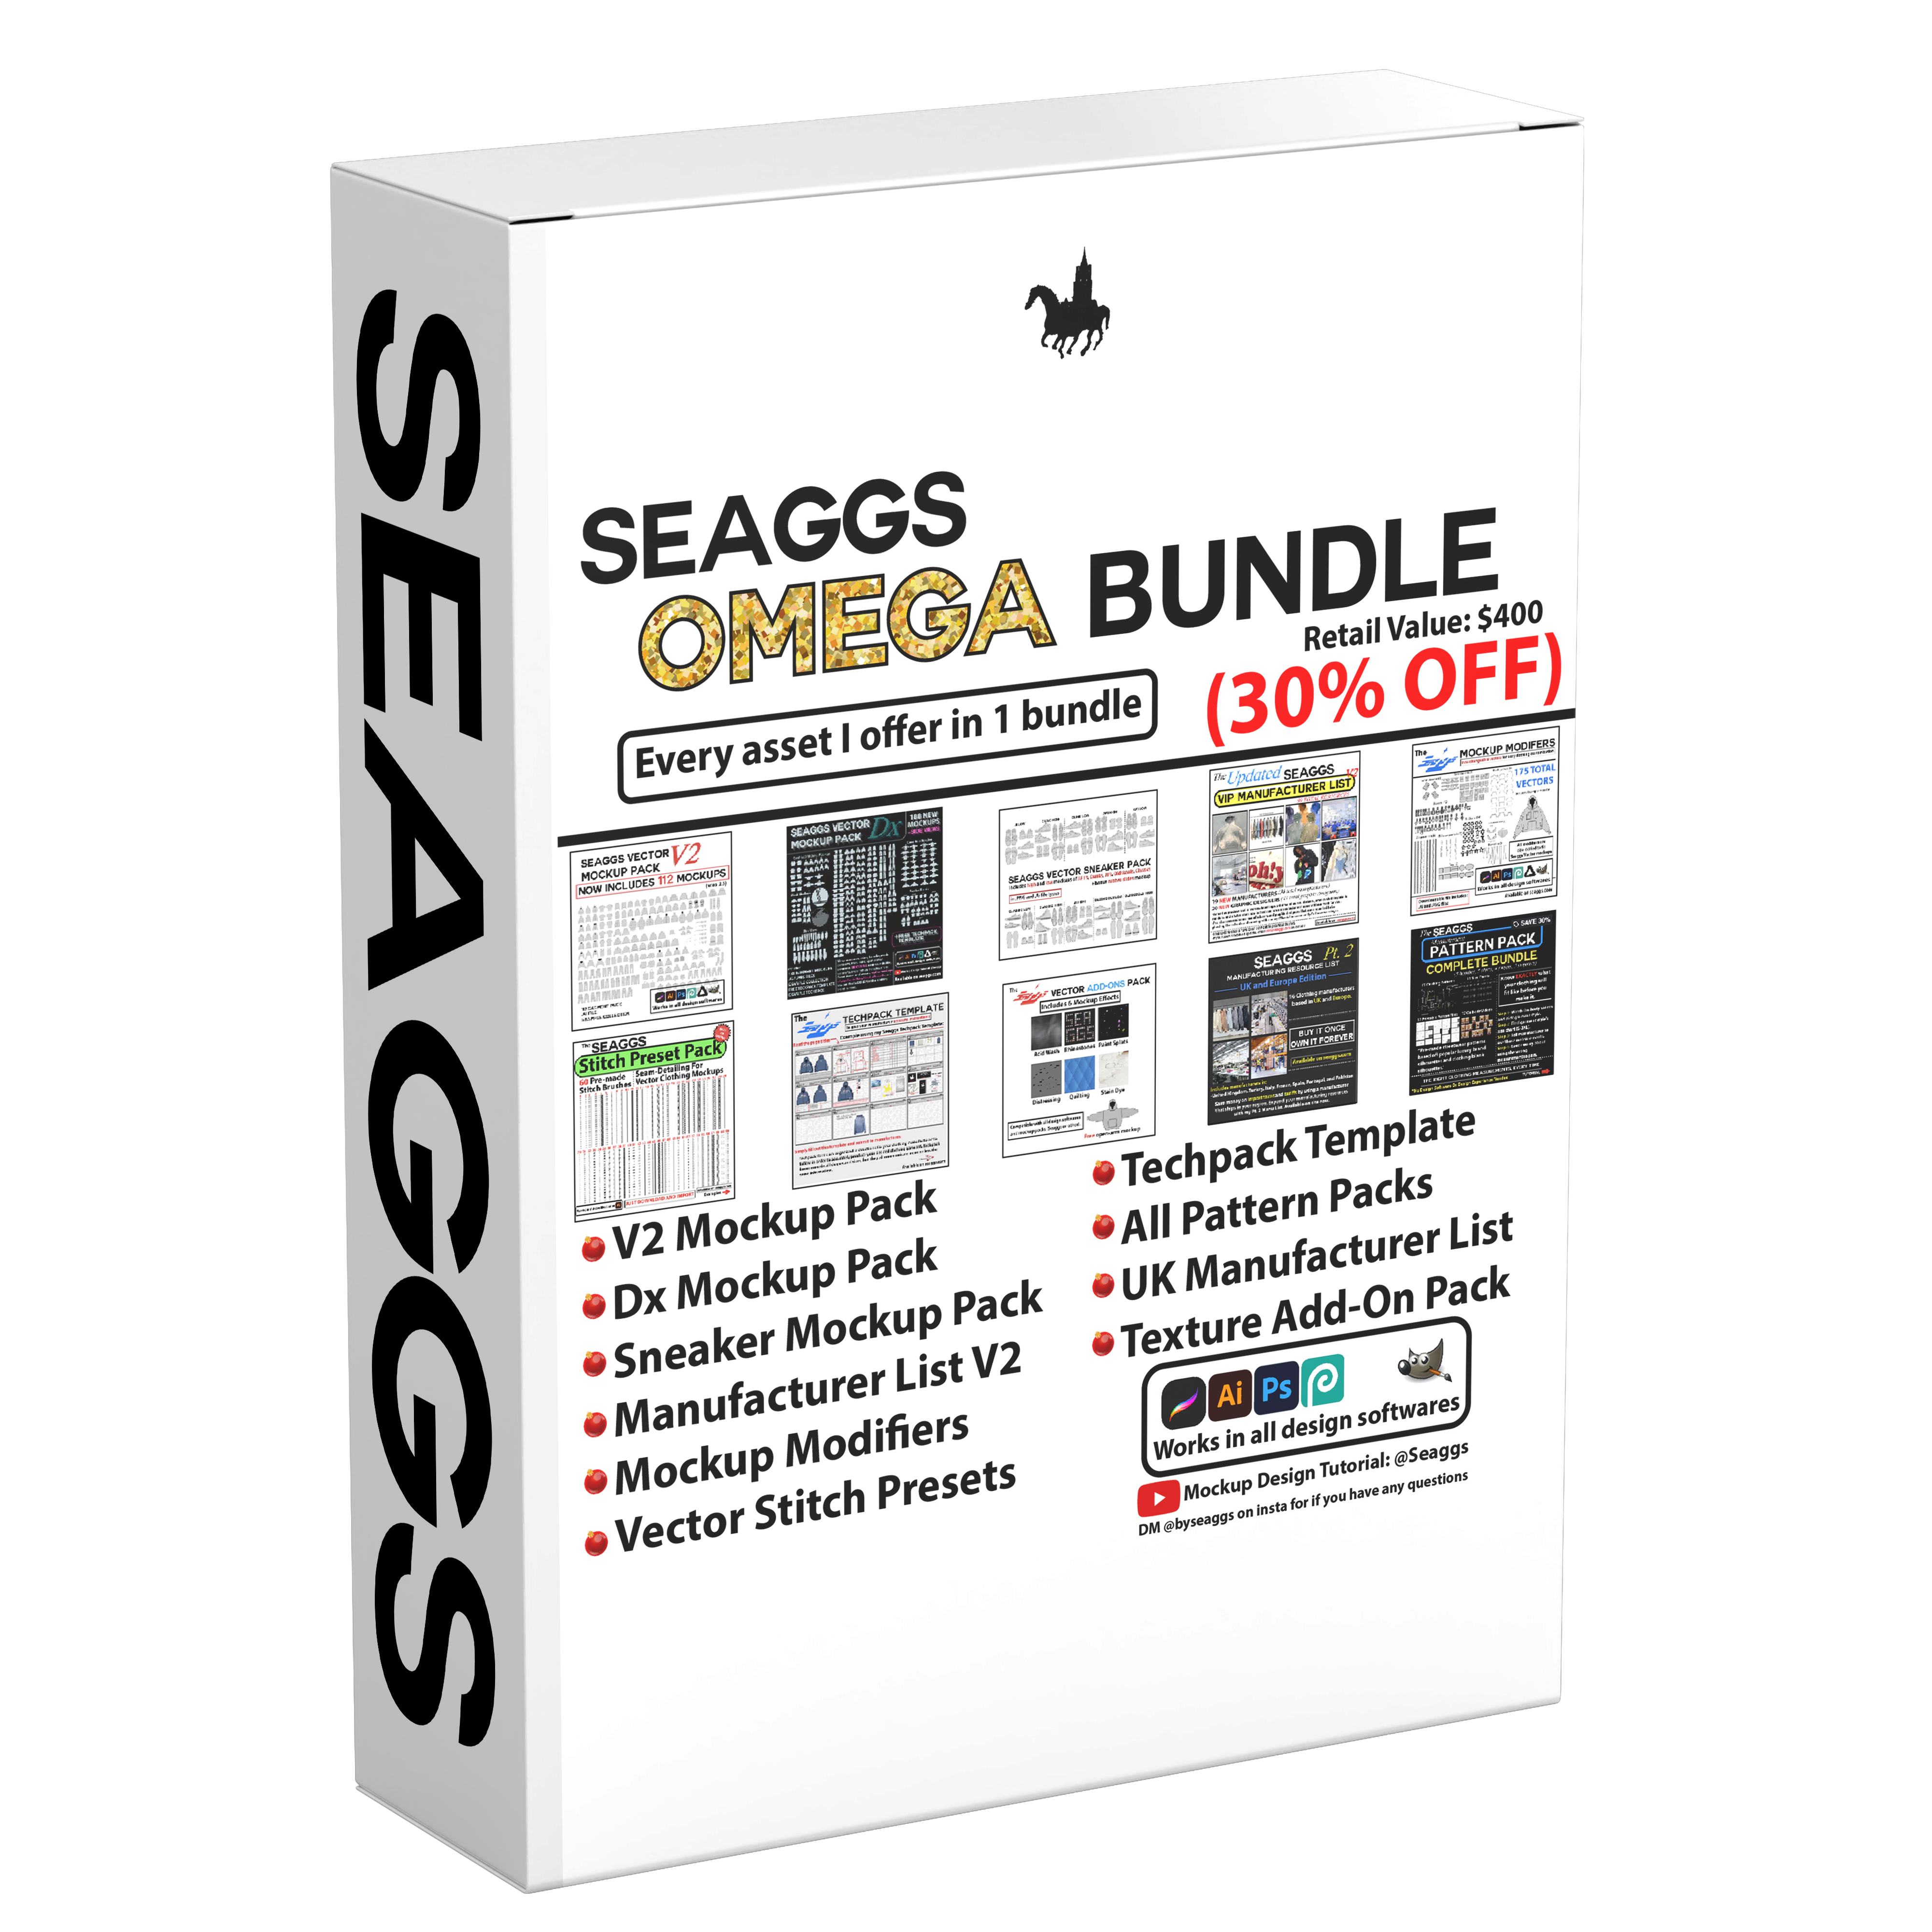 Seaggs OMEGA Assets Bundle